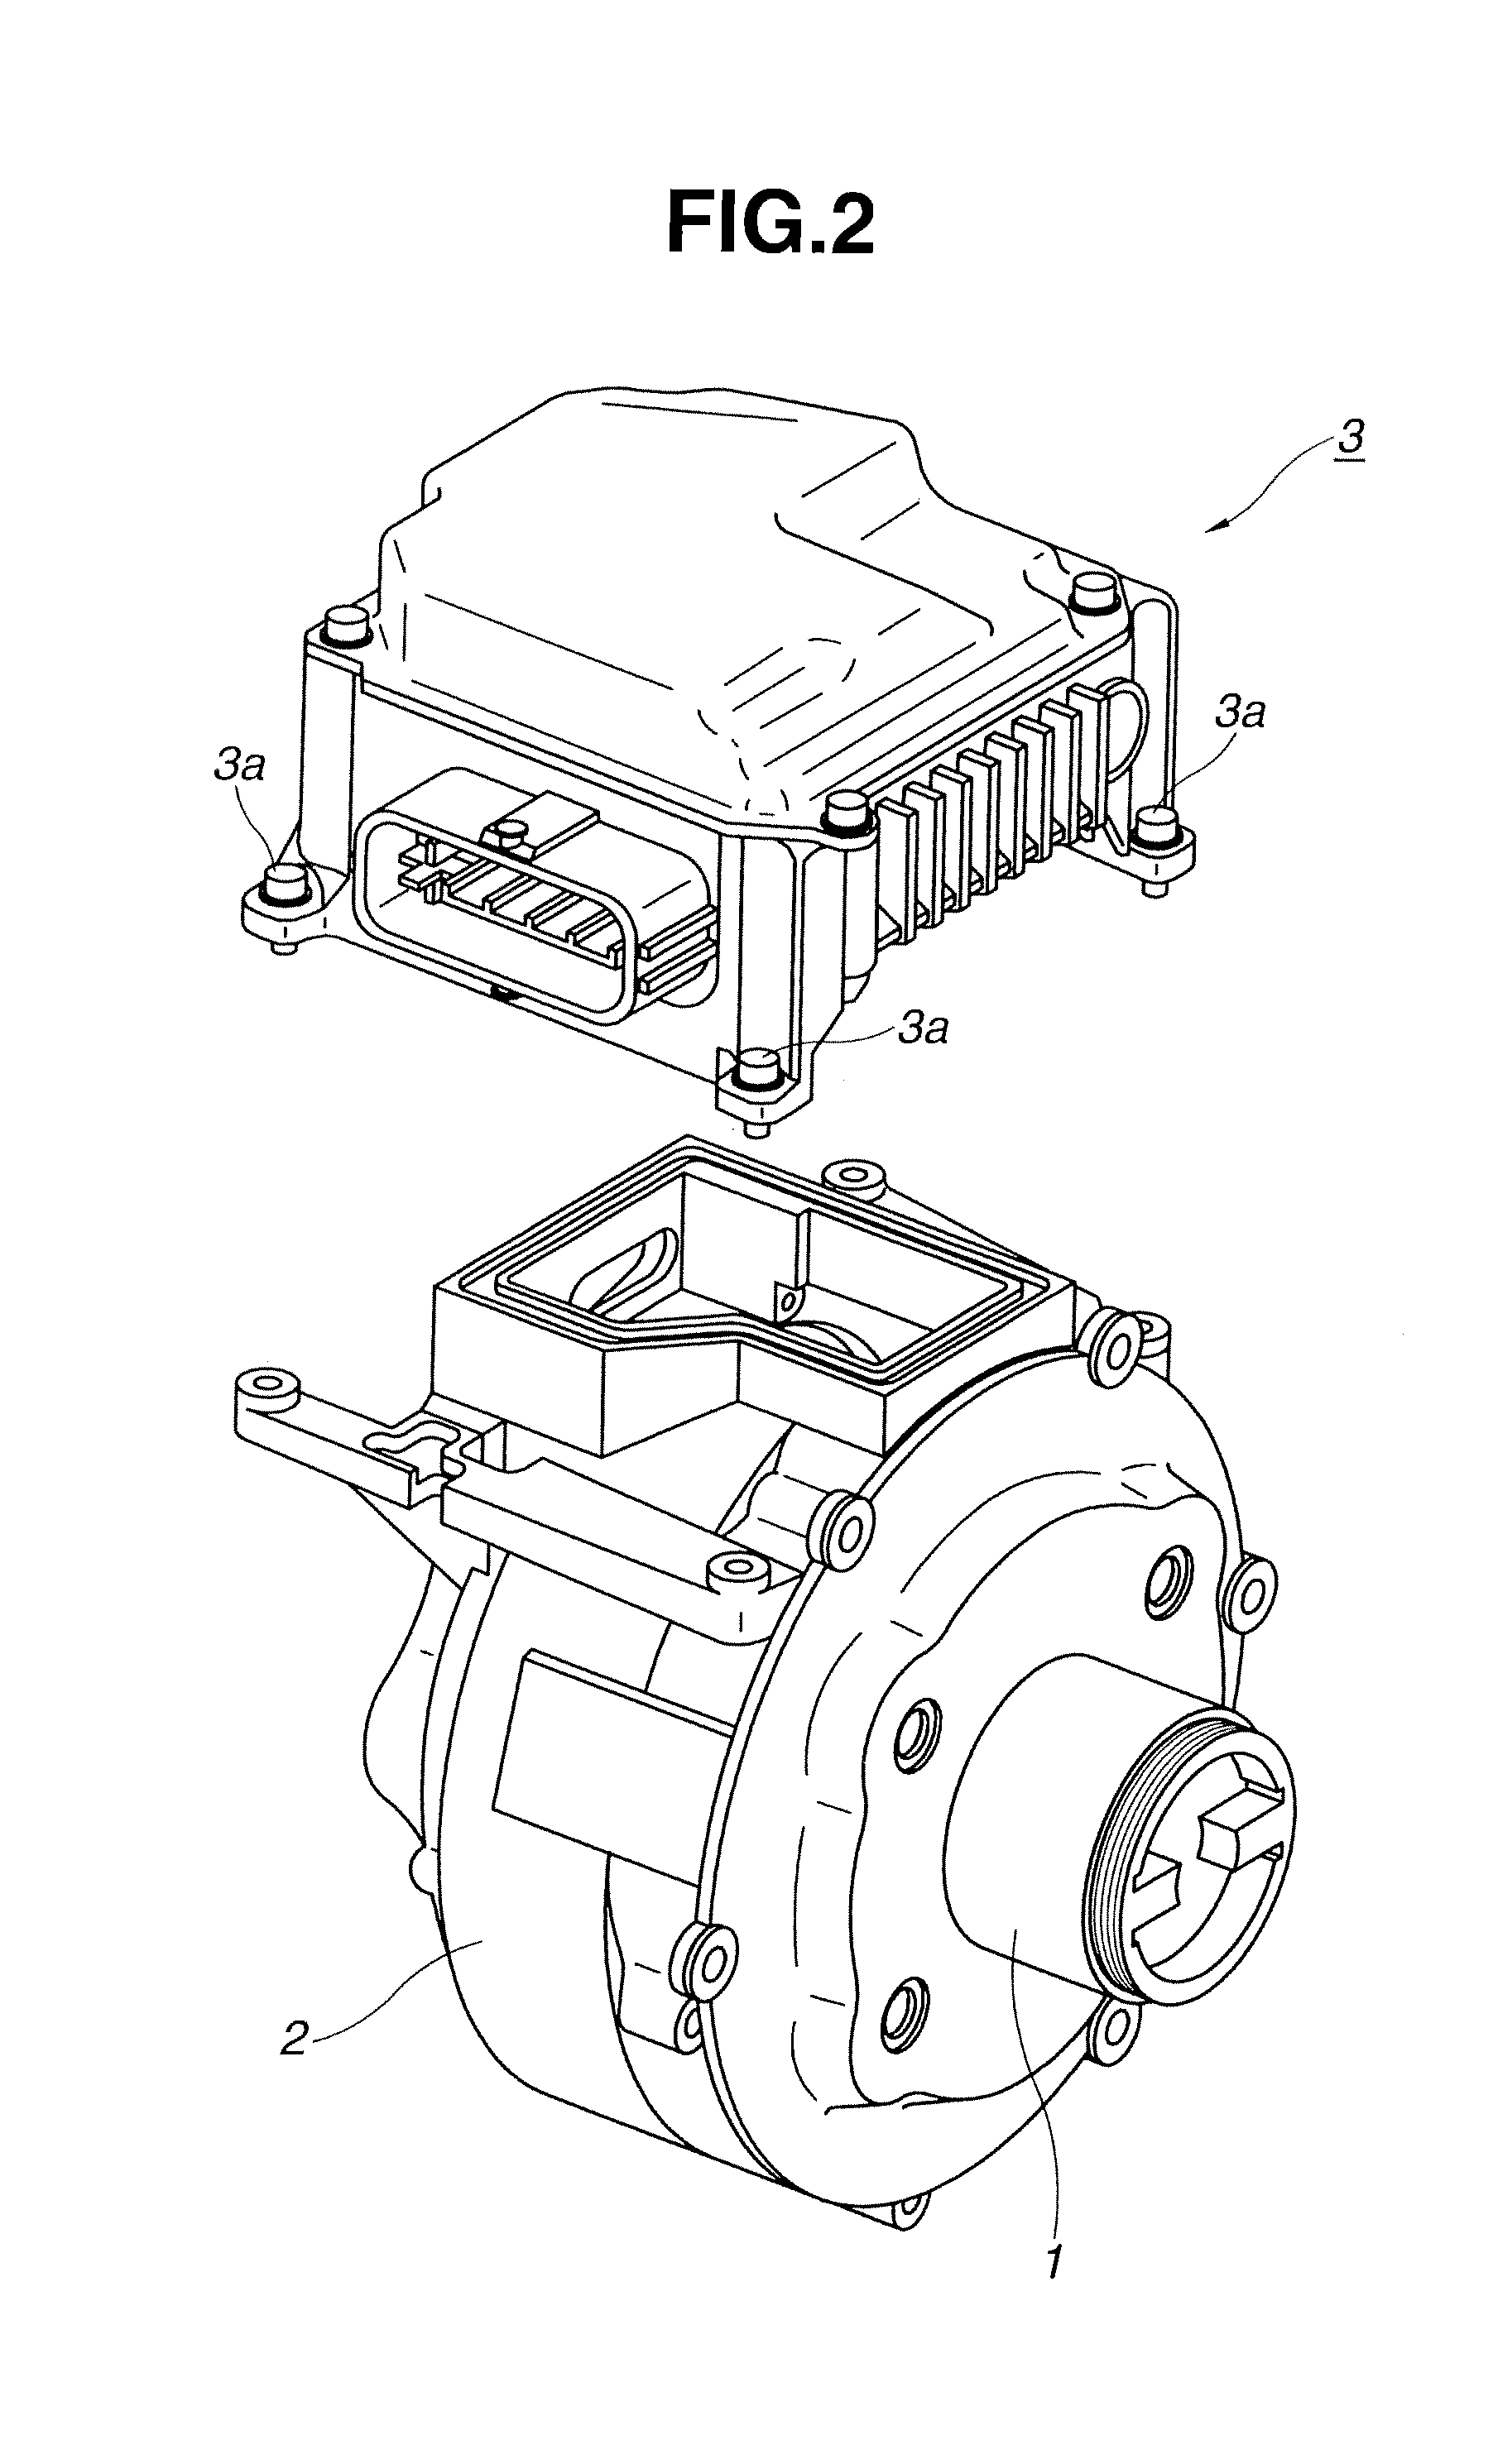 Electronic control apparatus